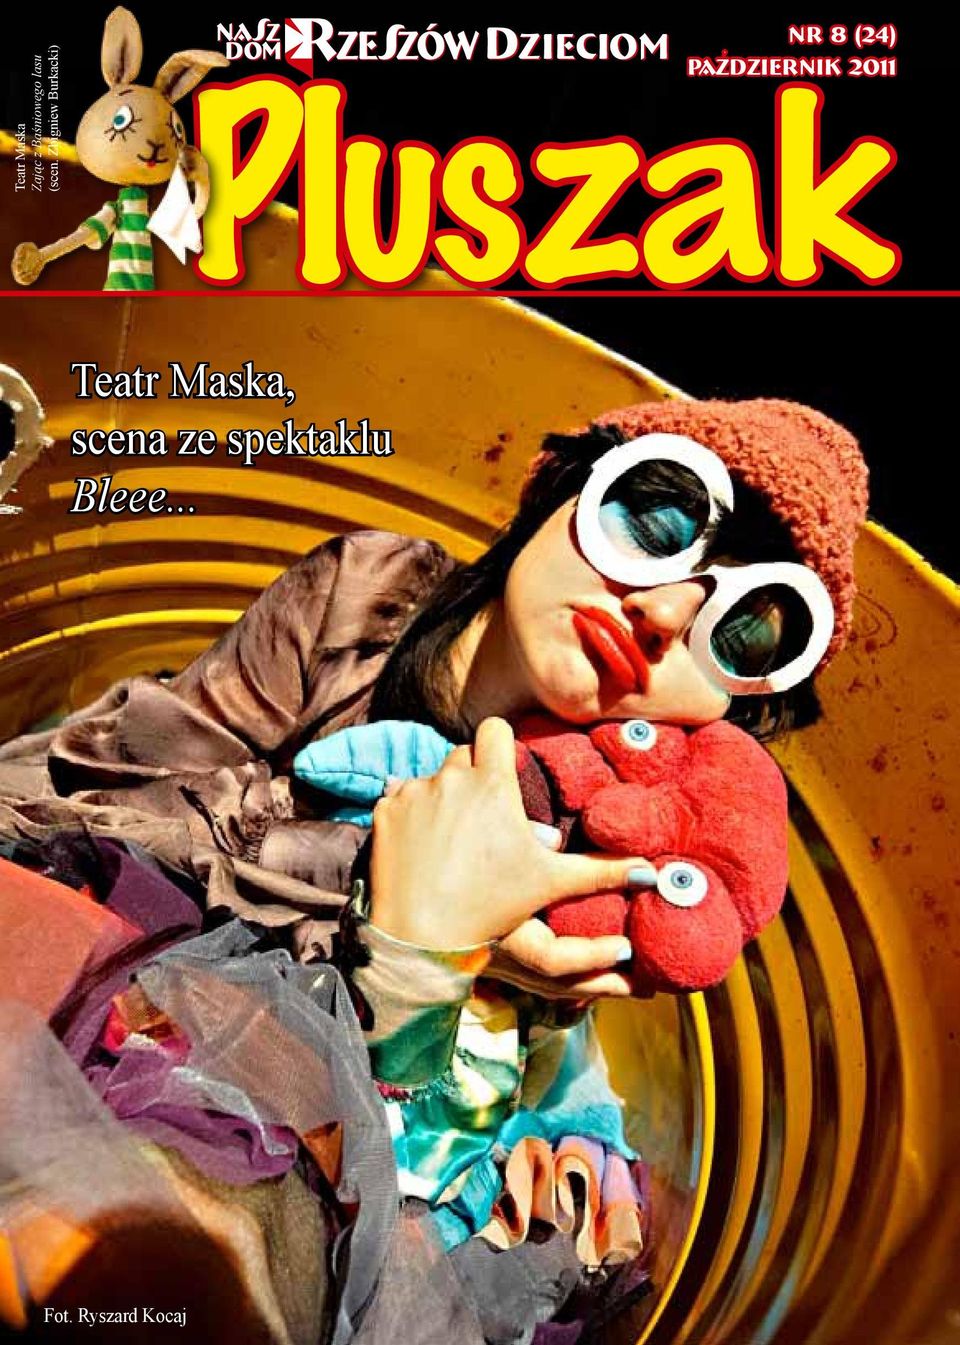 PAZDZIERNIK 2011 Pluszak Teatr Maska,